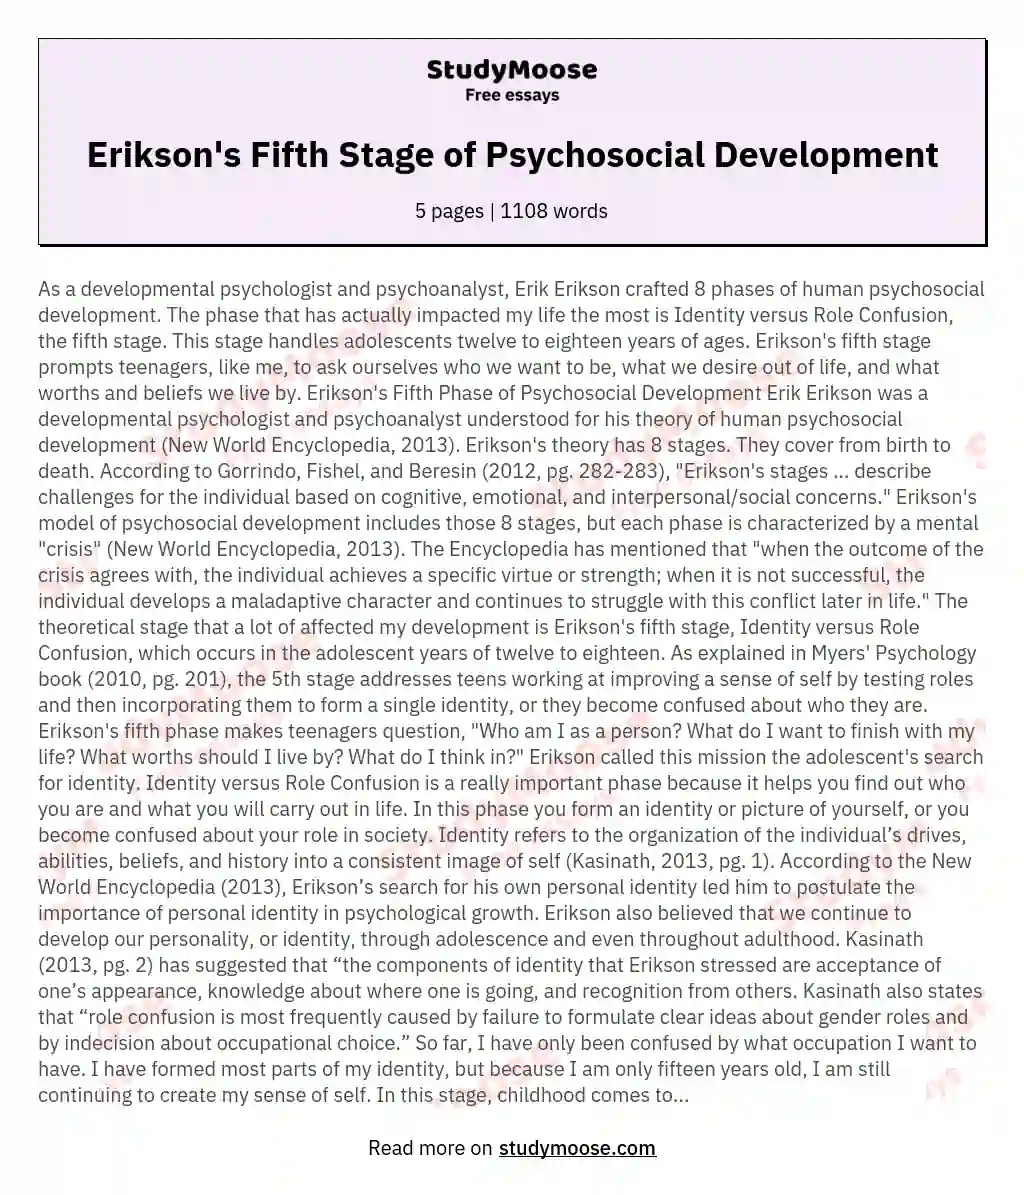 Erikson's Fifth Stage of Psychosocial Development essay